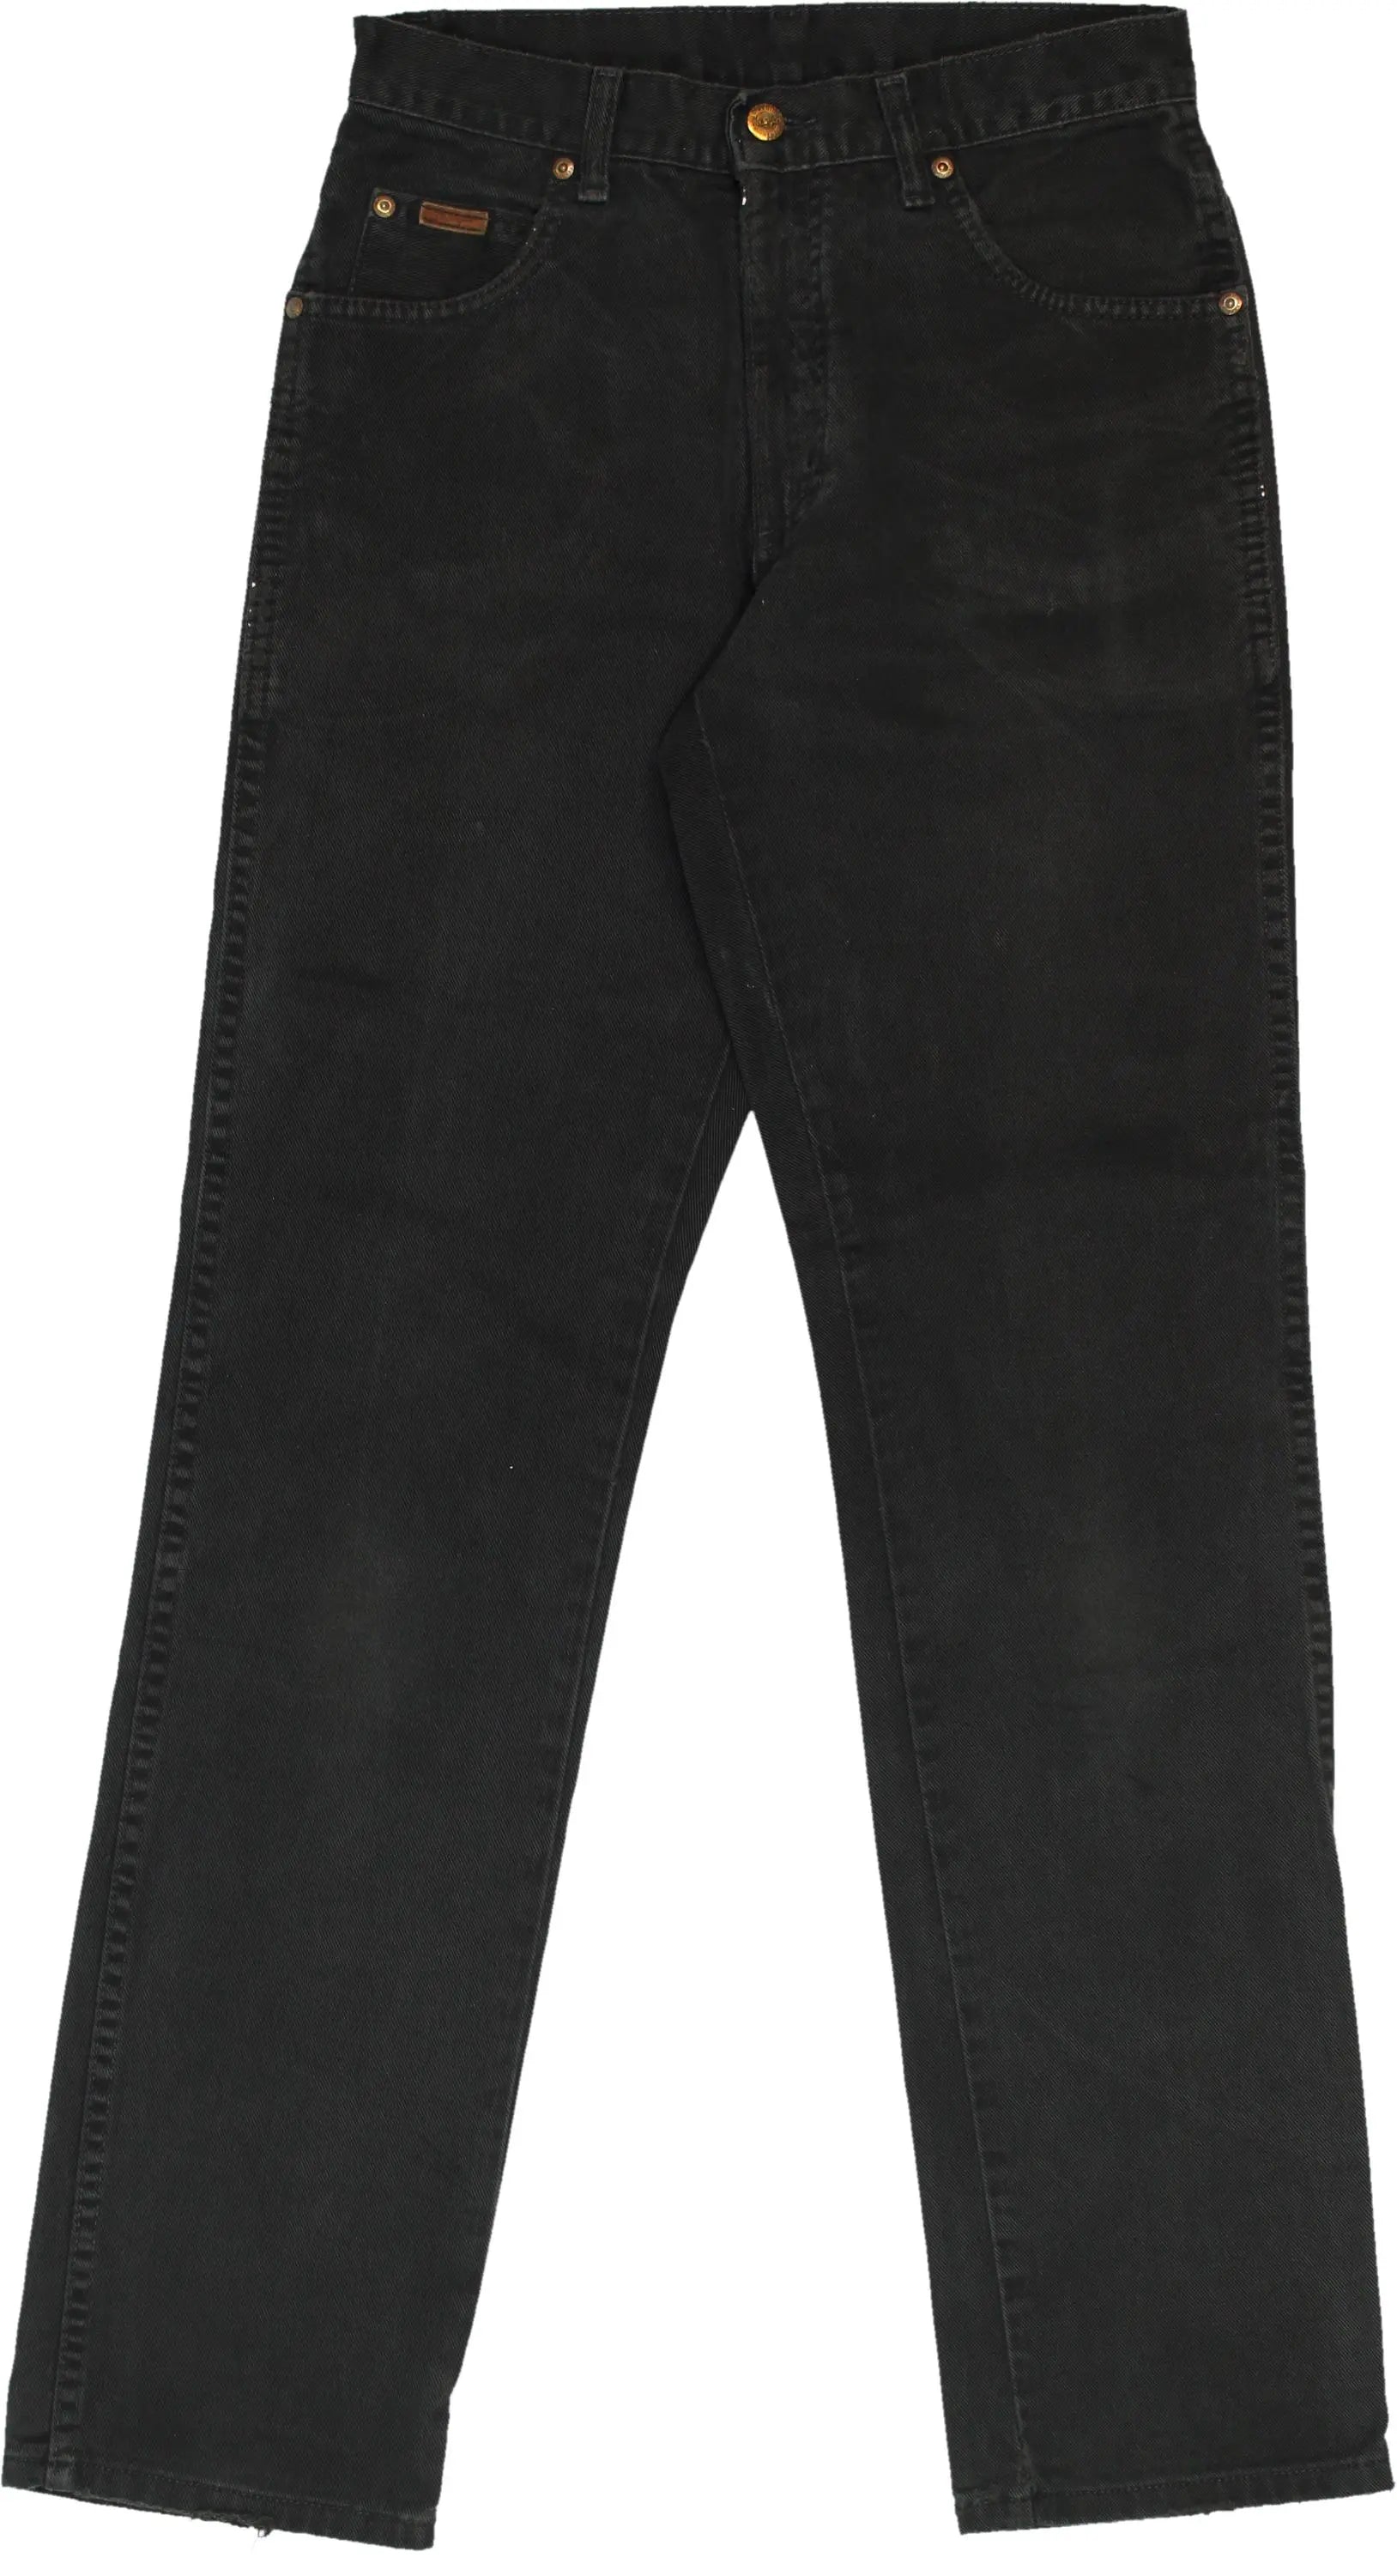 Wrangler - Wrangler Slim Fit Jeans- ThriftTale.com - Vintage and second handclothing